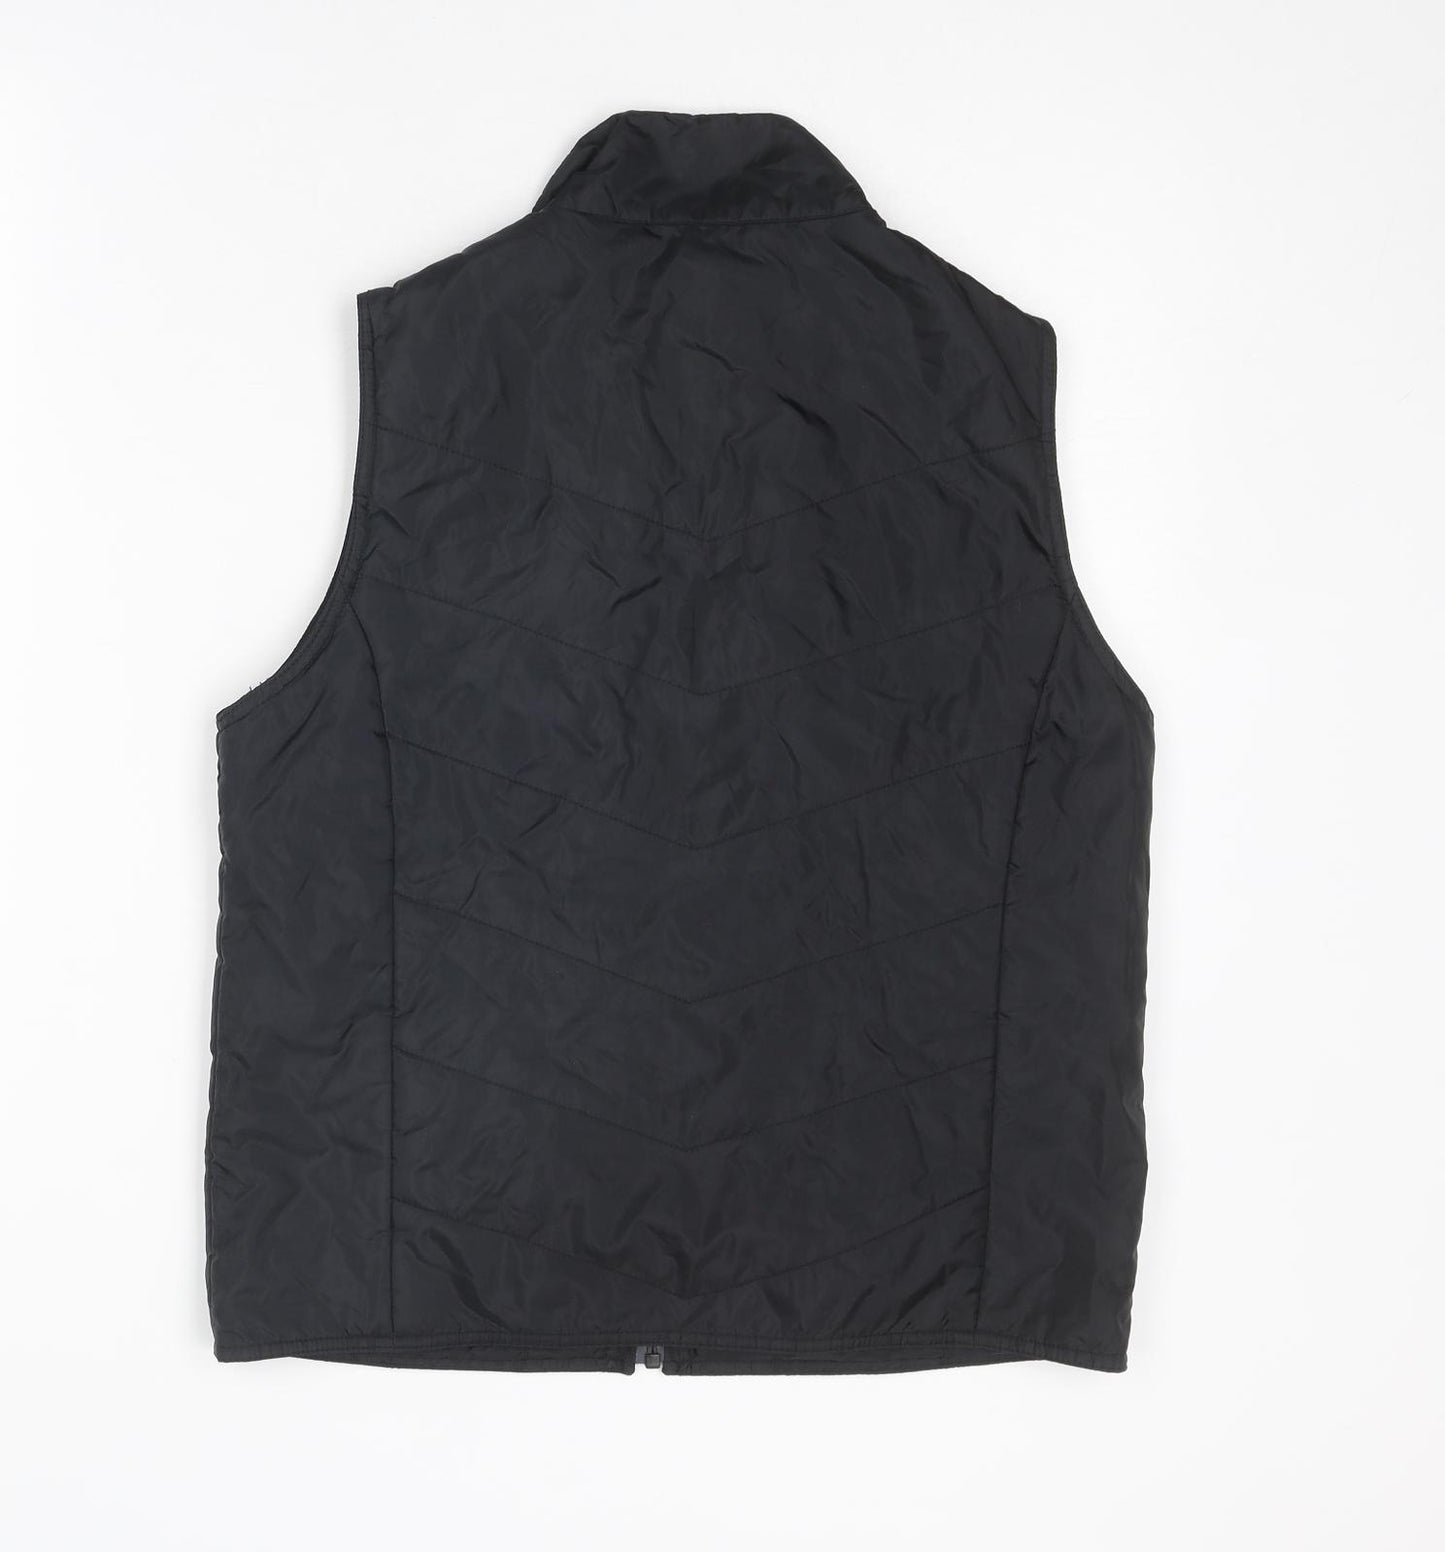 Mackays Womens Black Gilet Jacket Size M Zip